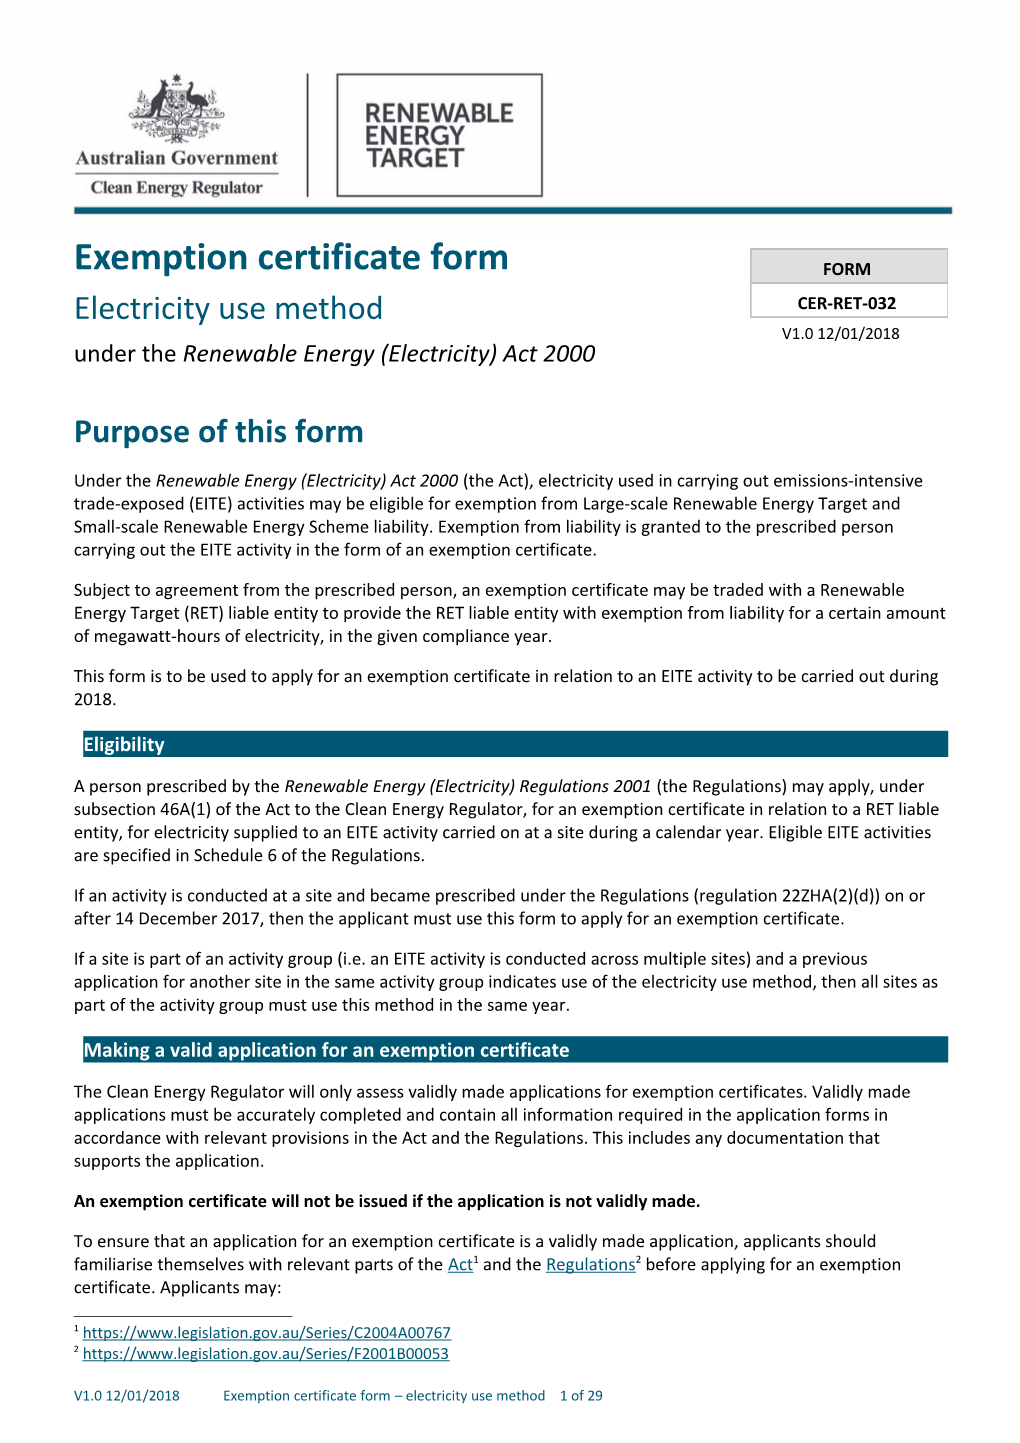 CER-RET-032 Exemption Certificate Form - Electricity Use Method